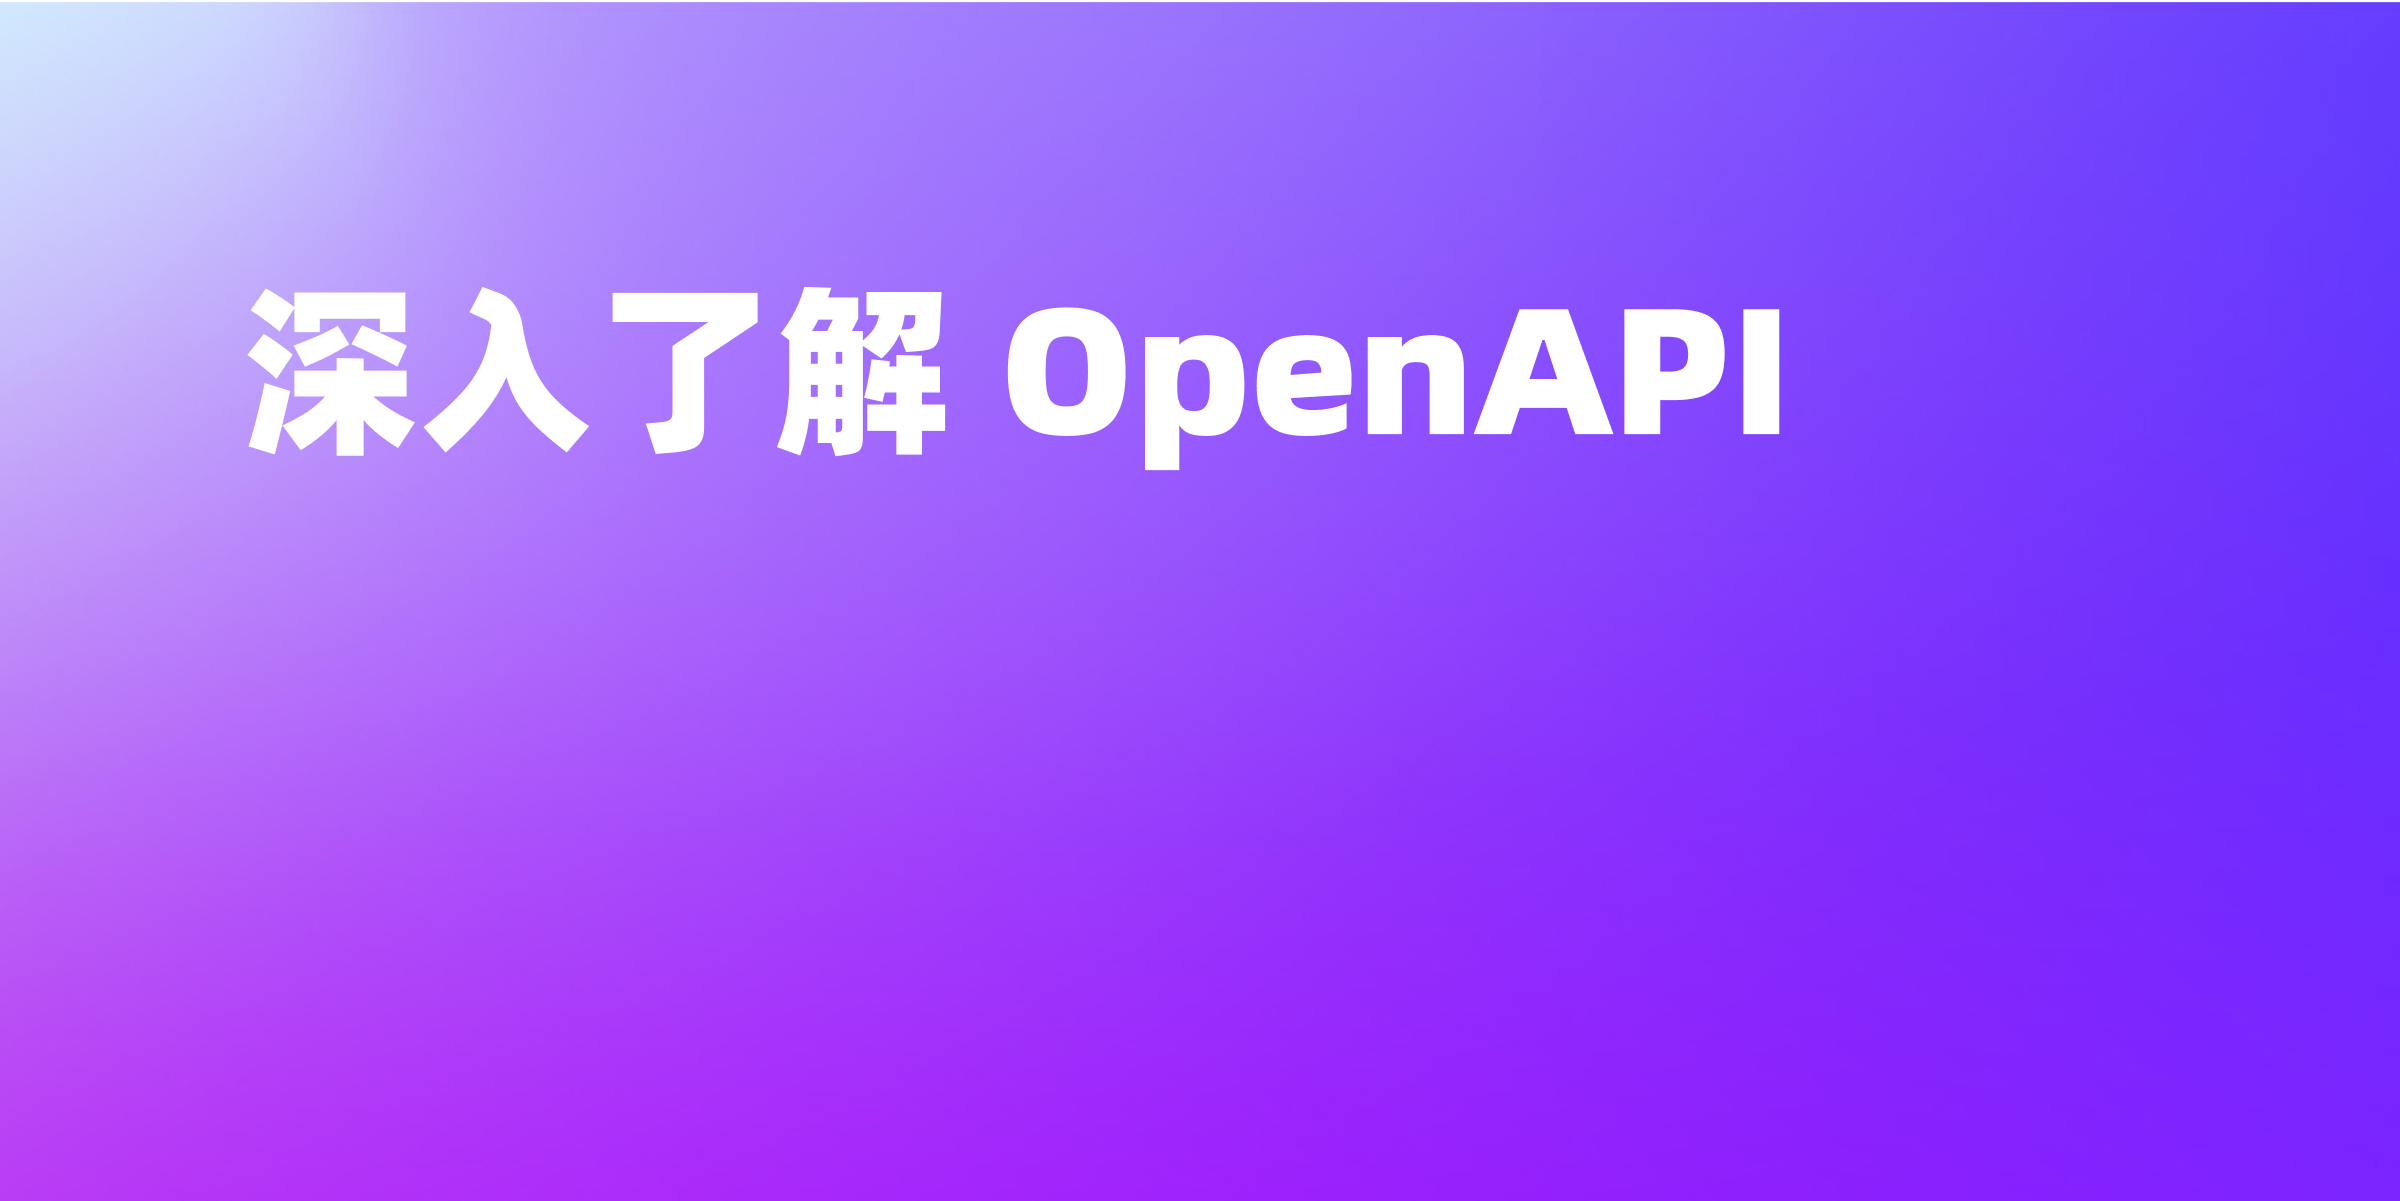 OpenAPI 是什么？